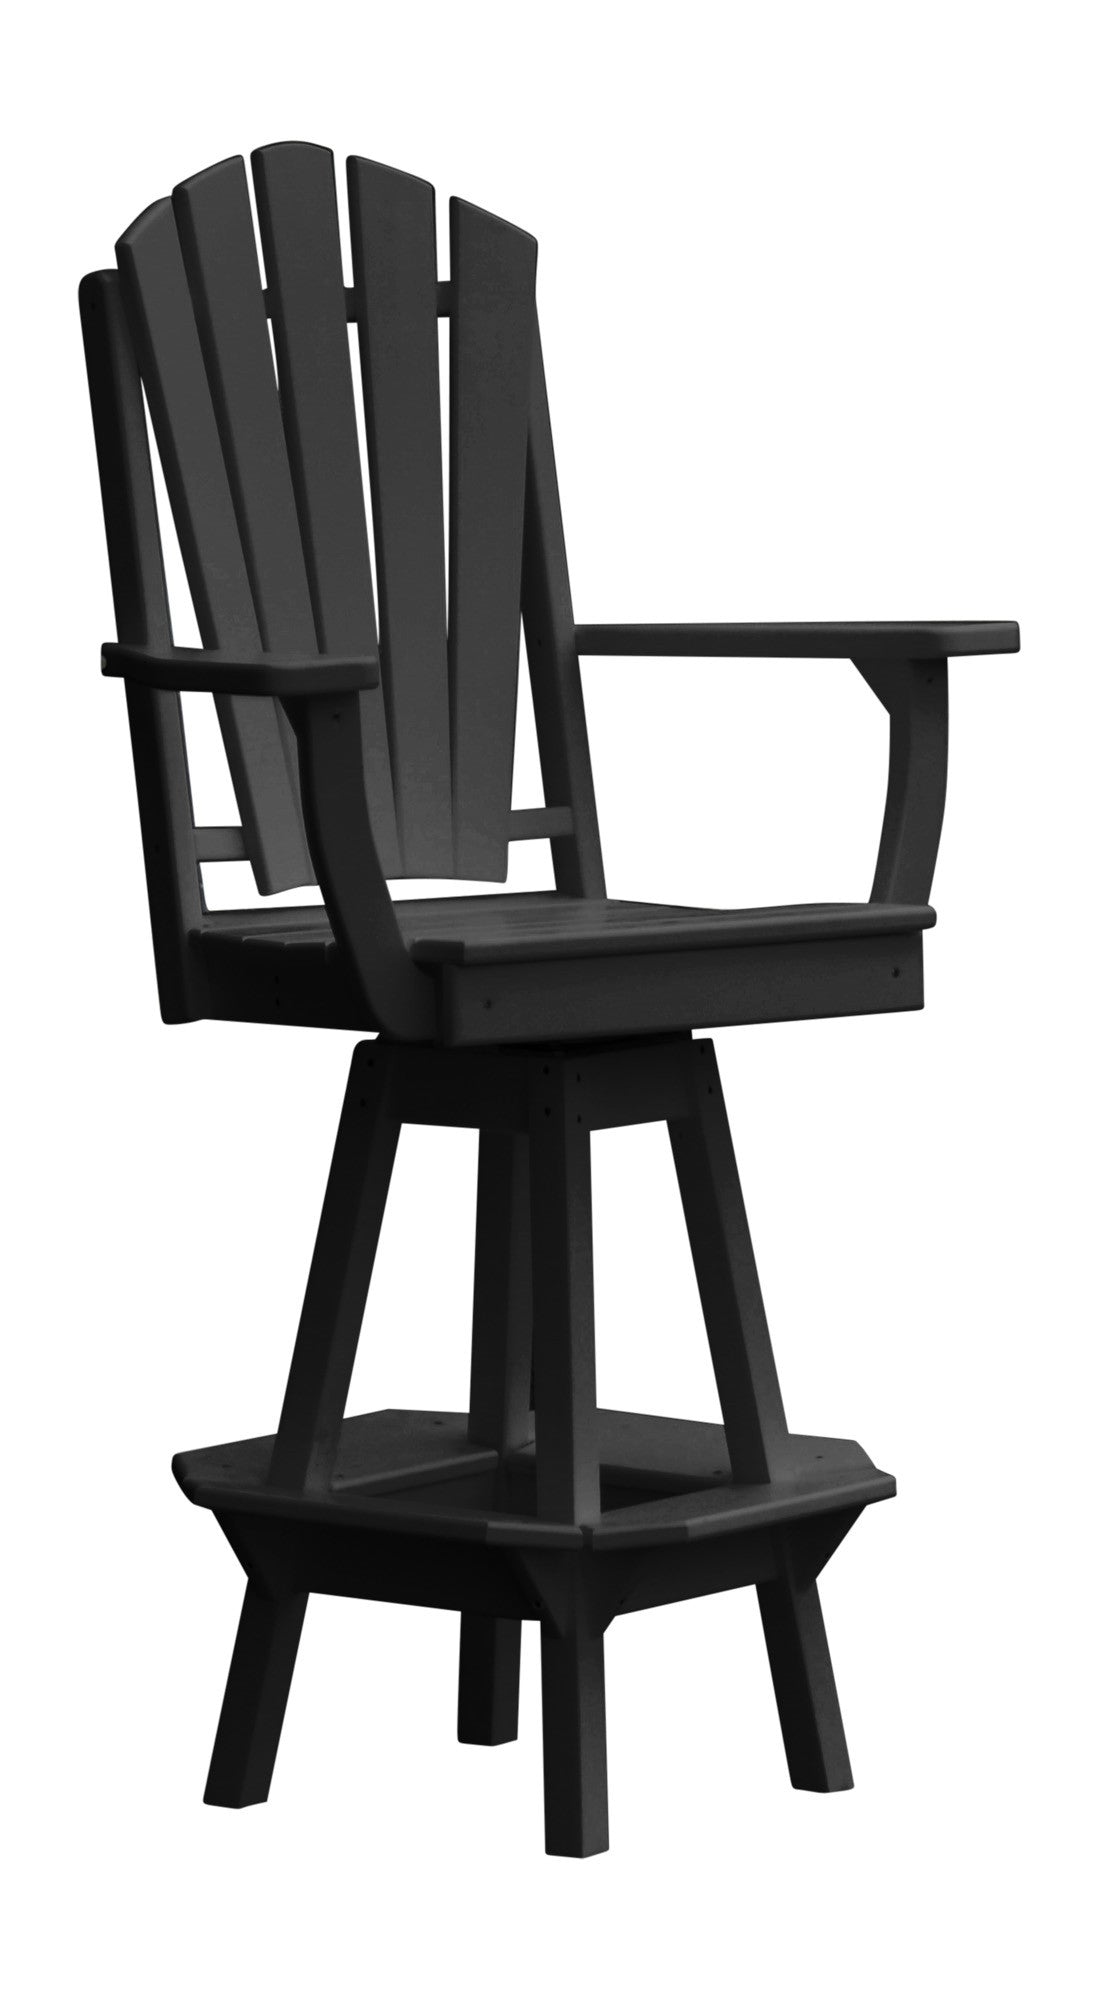 A&L Furniture Recycled Plastic Adirondack Swivel Bar Chair w/Arms - Black